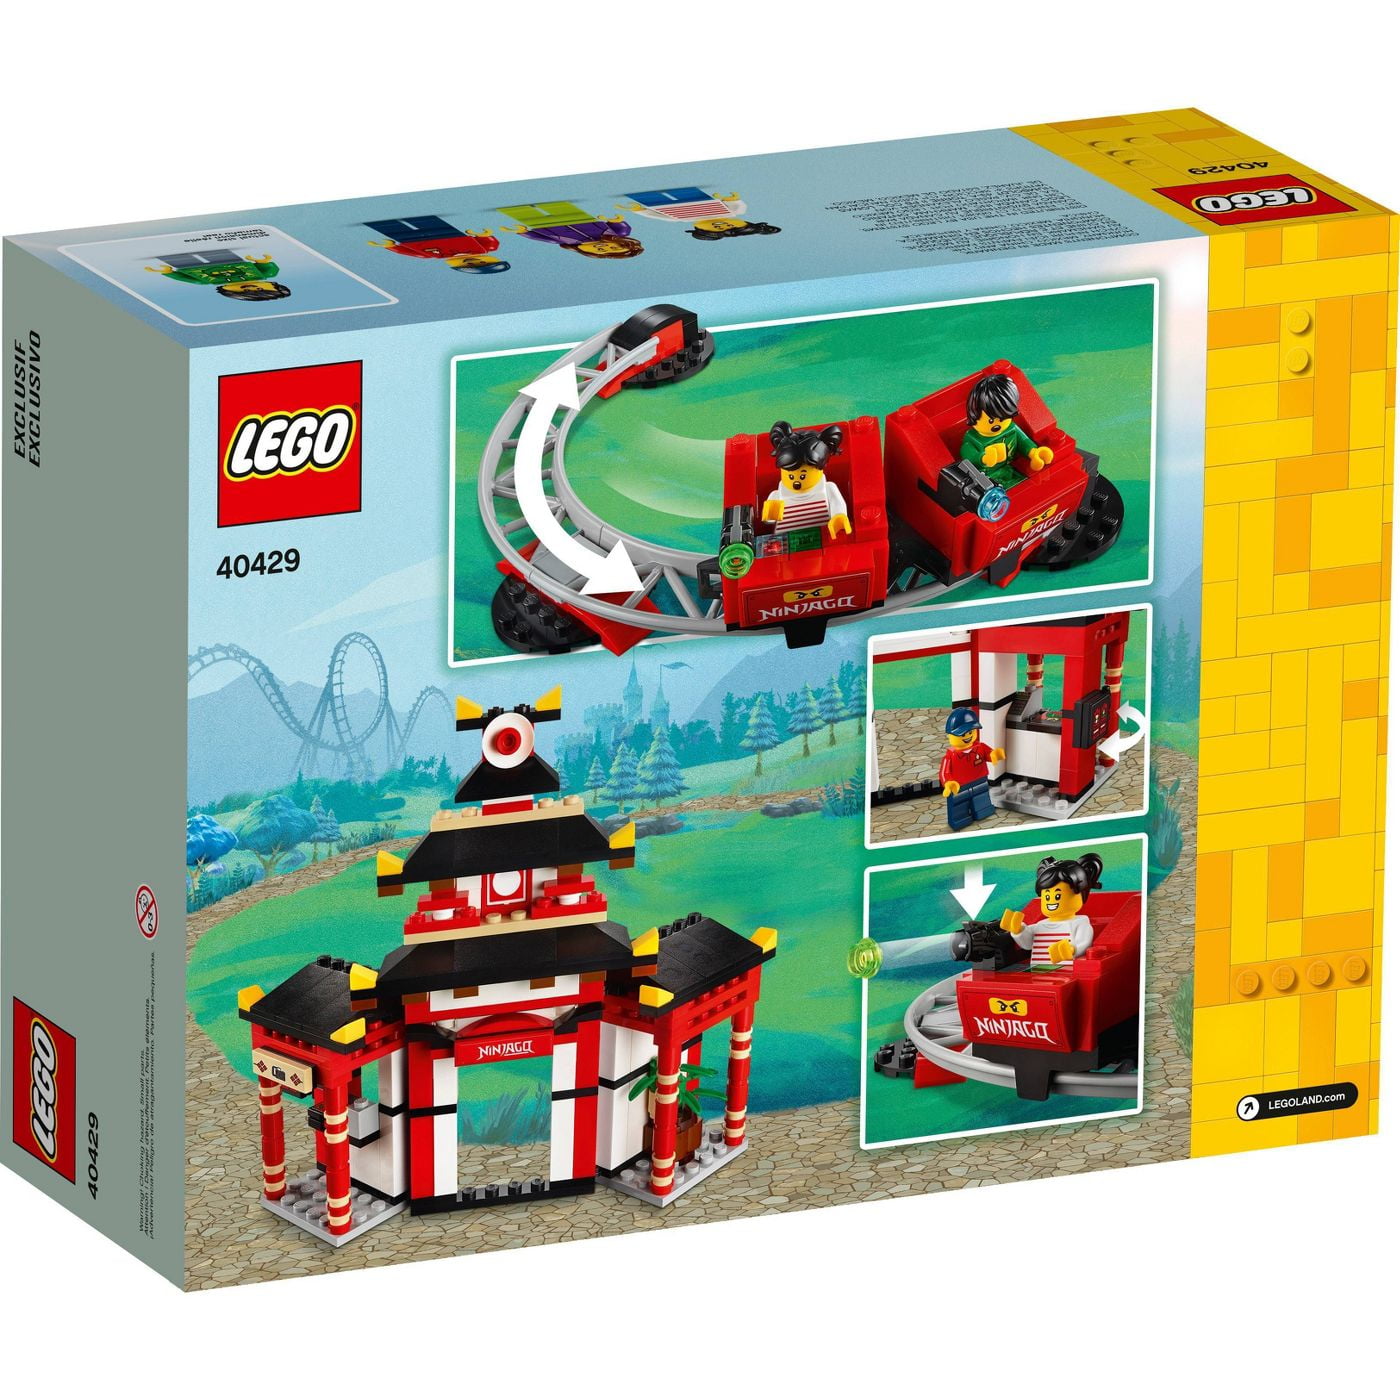 LEGO Legoland World 40429 - Walmart.com